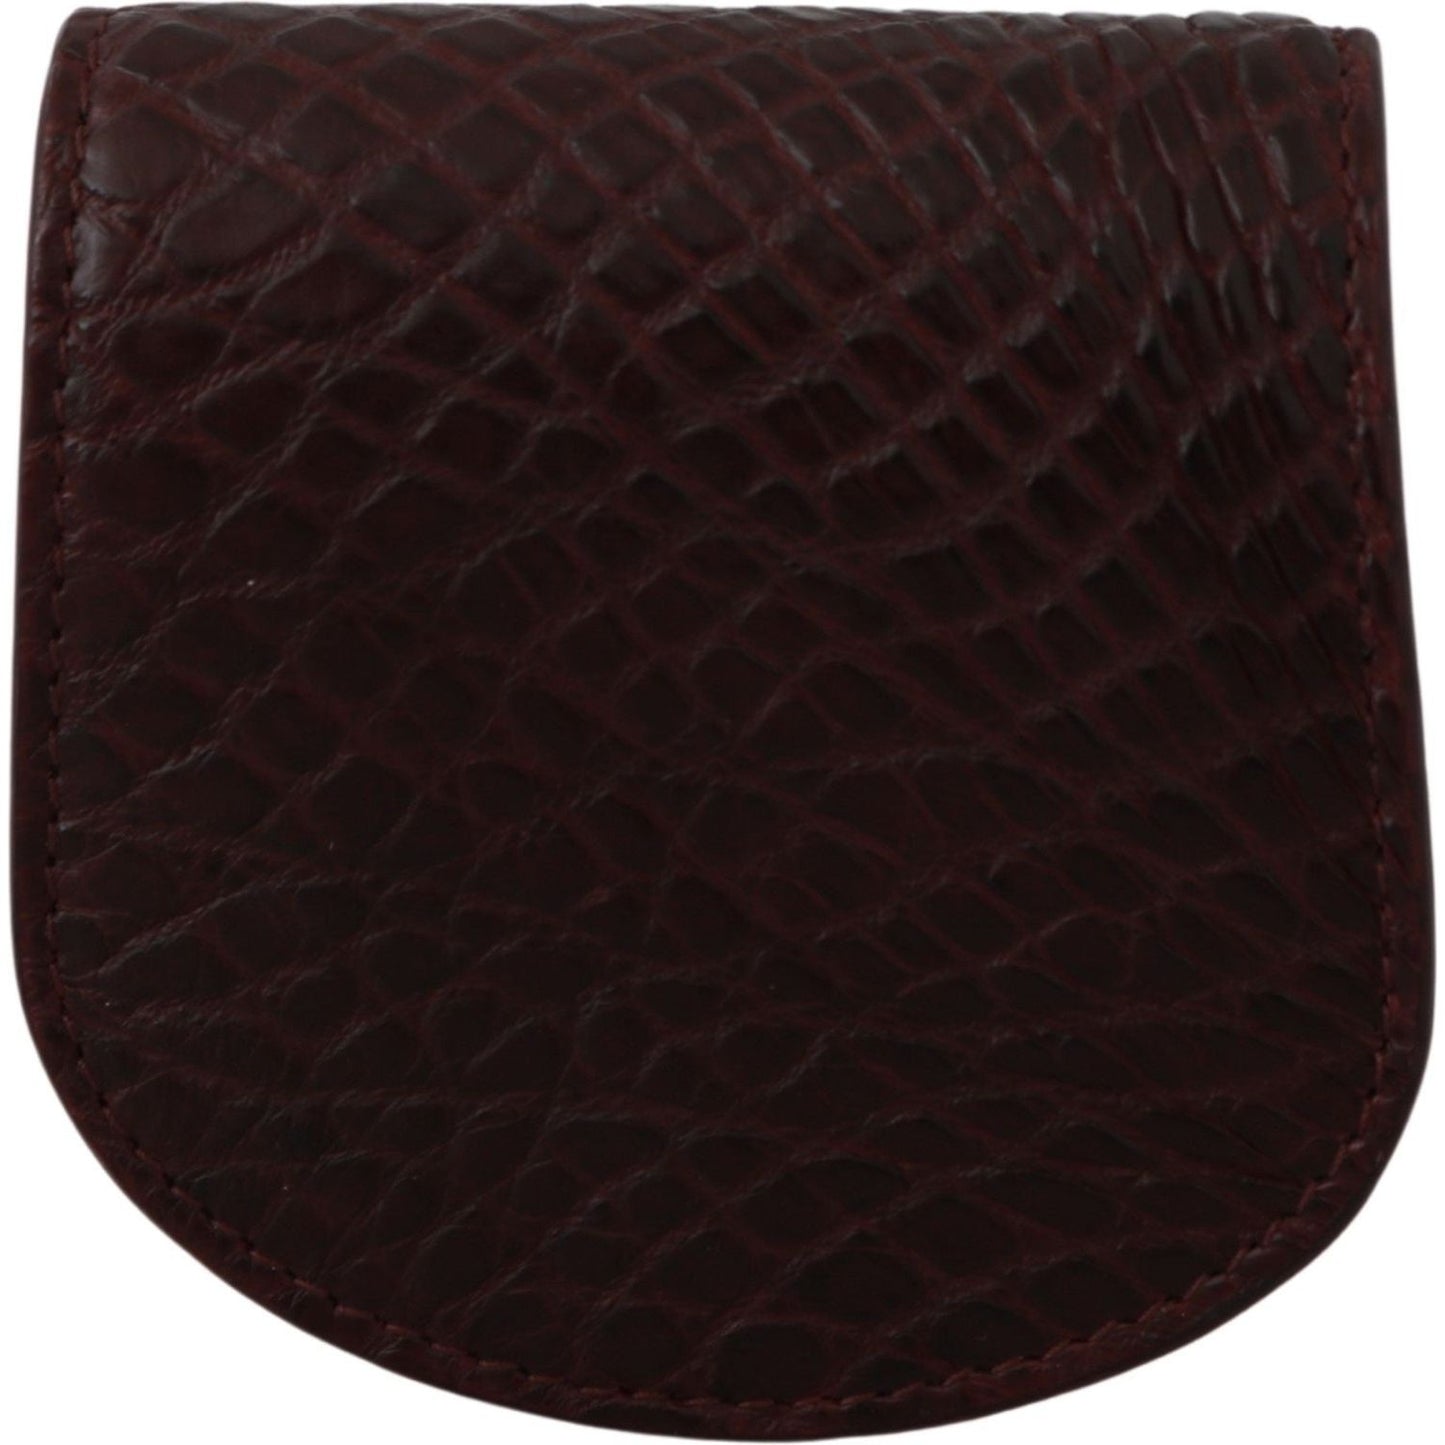 Dolce & Gabbana Refined Caimano Leather Coin Case Condom Case brown-exotic-skin-pocket-condom-case-holder